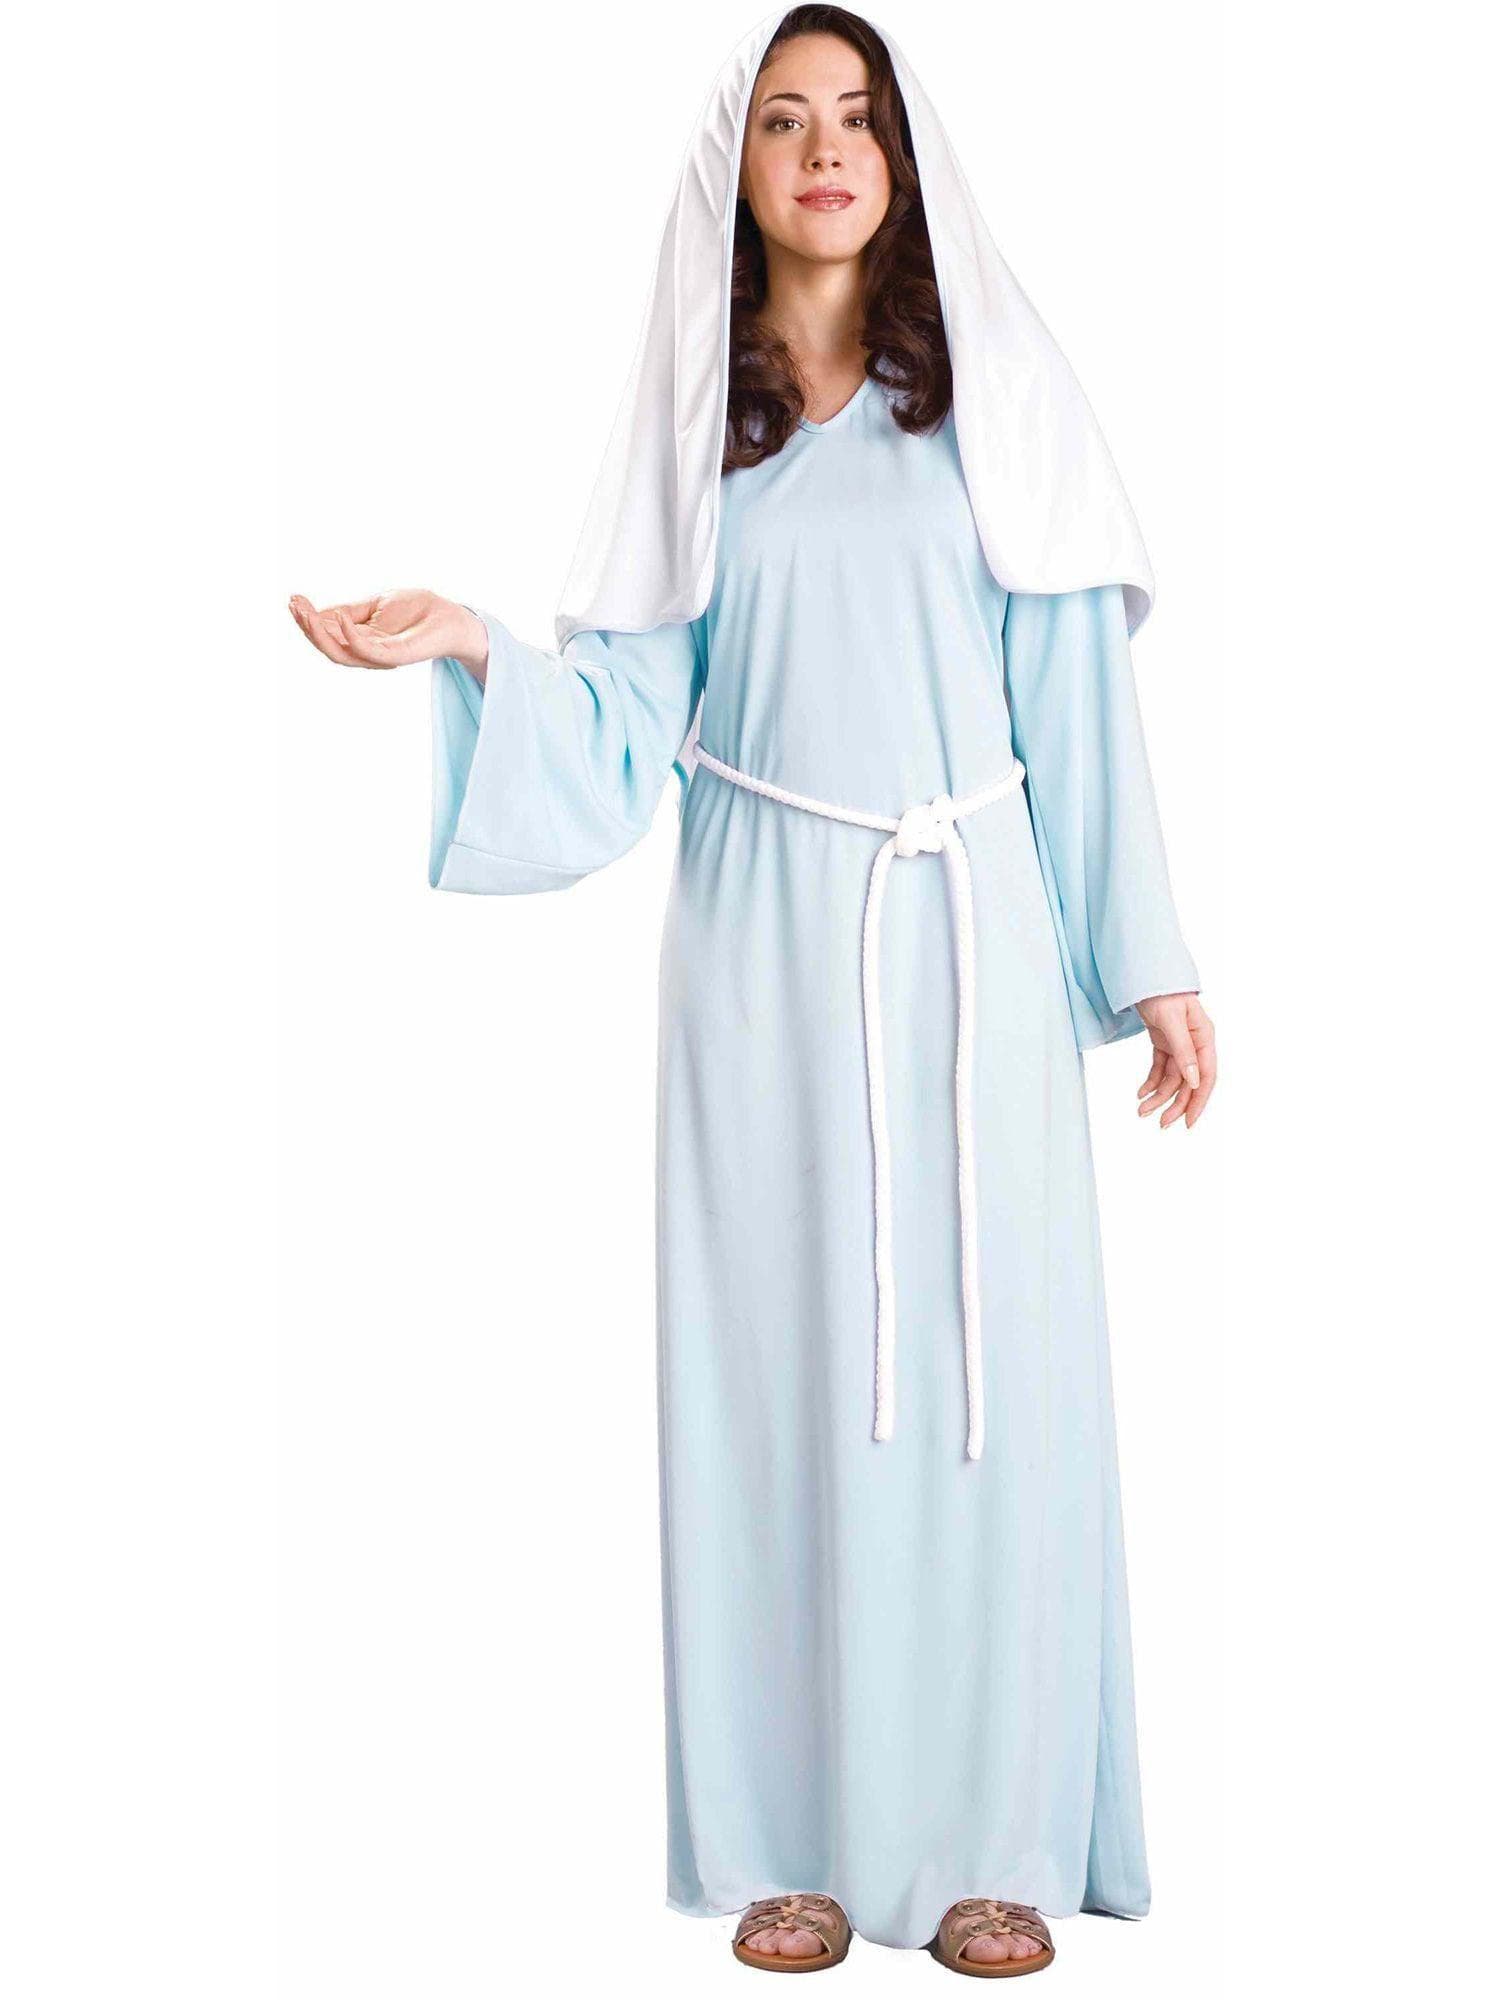 Women's Virgin Mary Costume - costumes.com